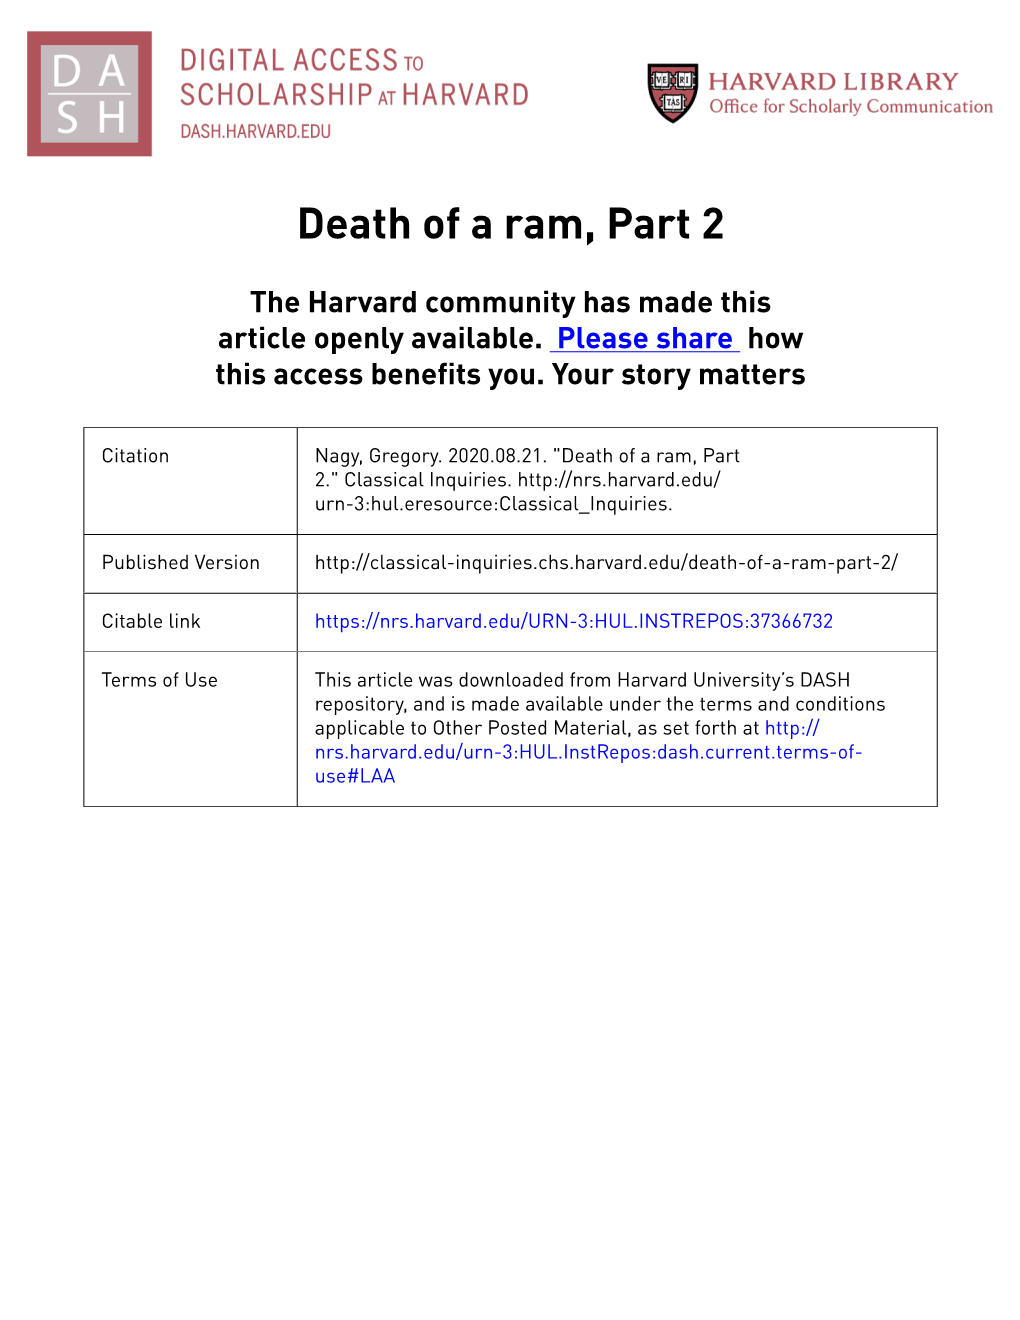 Death of a Ram, Part 2